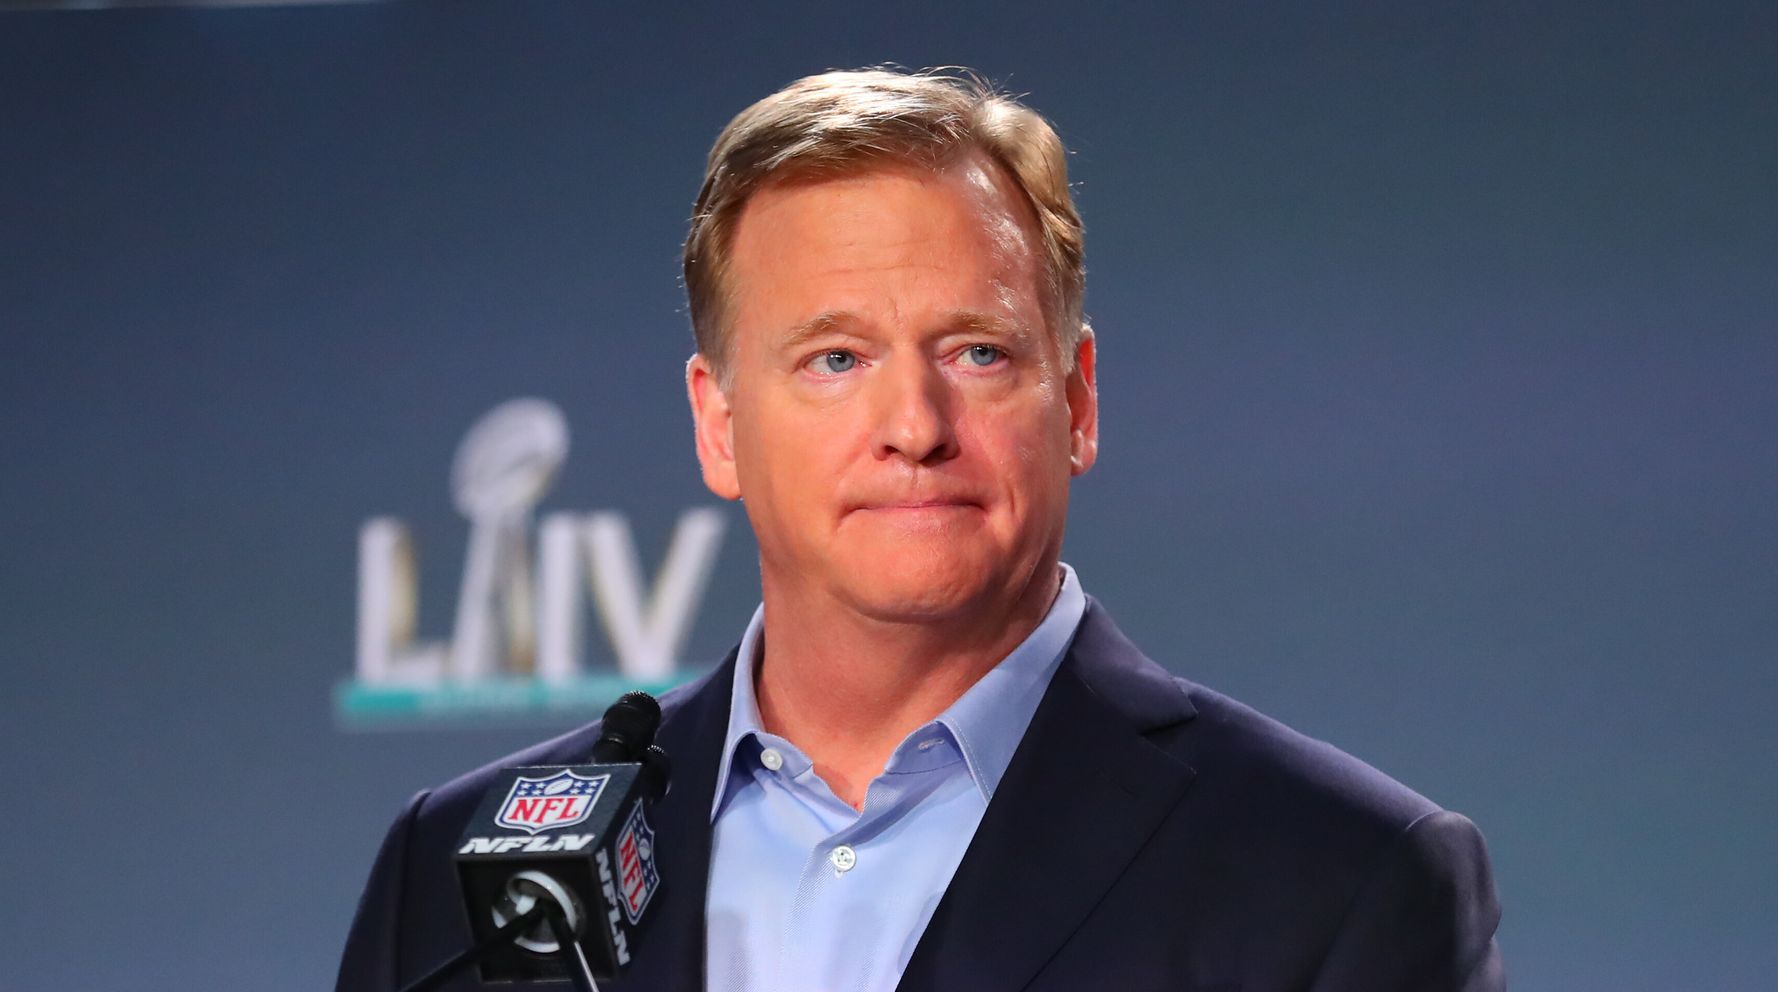 'Hypocrite': NFL's Roger Goodell Slammed For Statement On George Floyd Protests - HuffPost